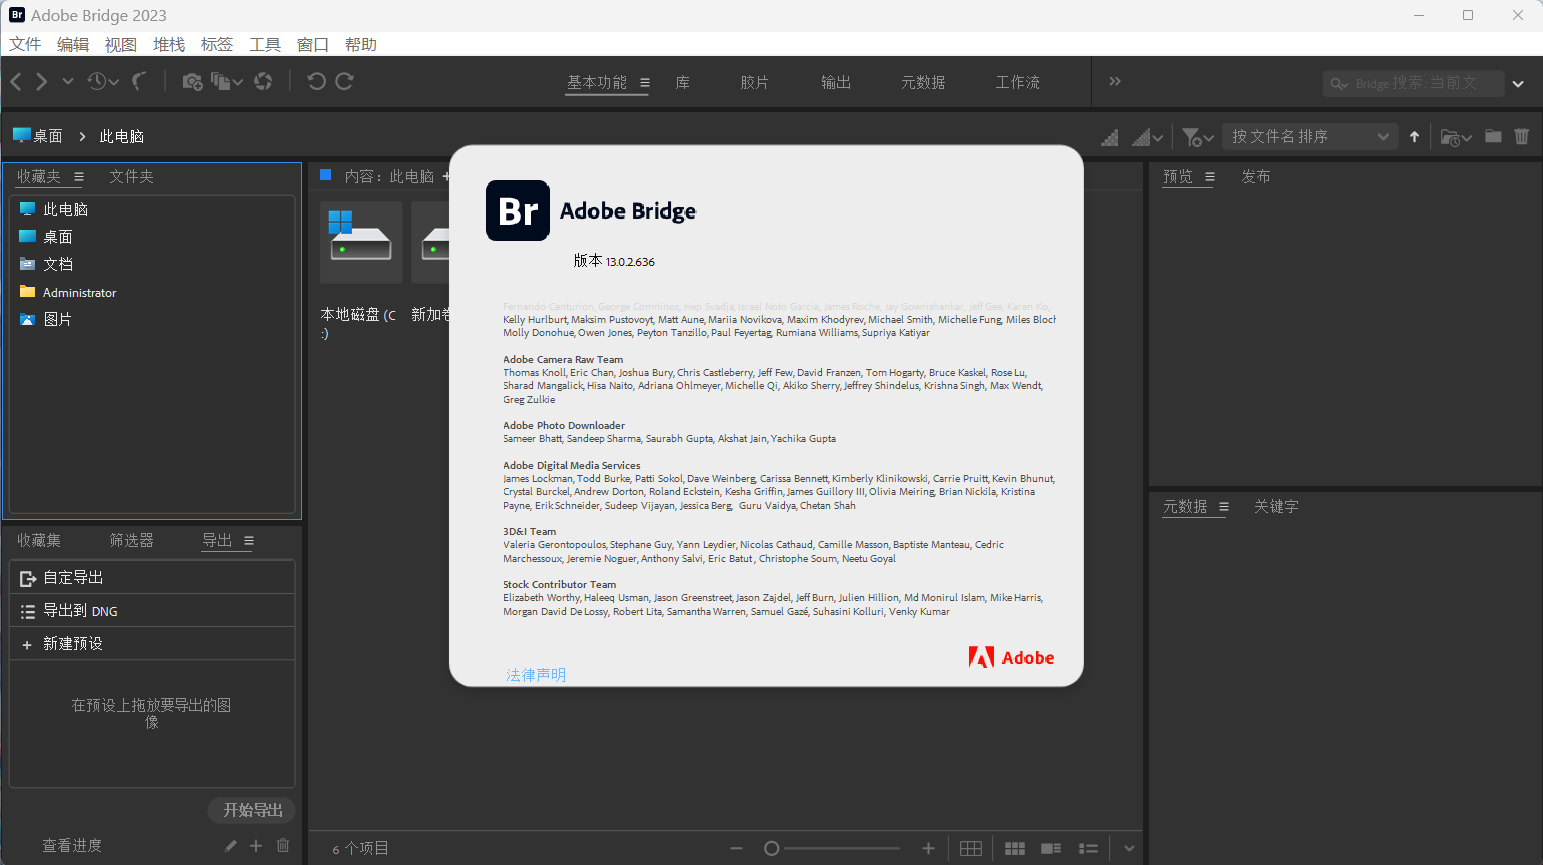 Adobe Bridge 2023 v13.0.4.755 for android download